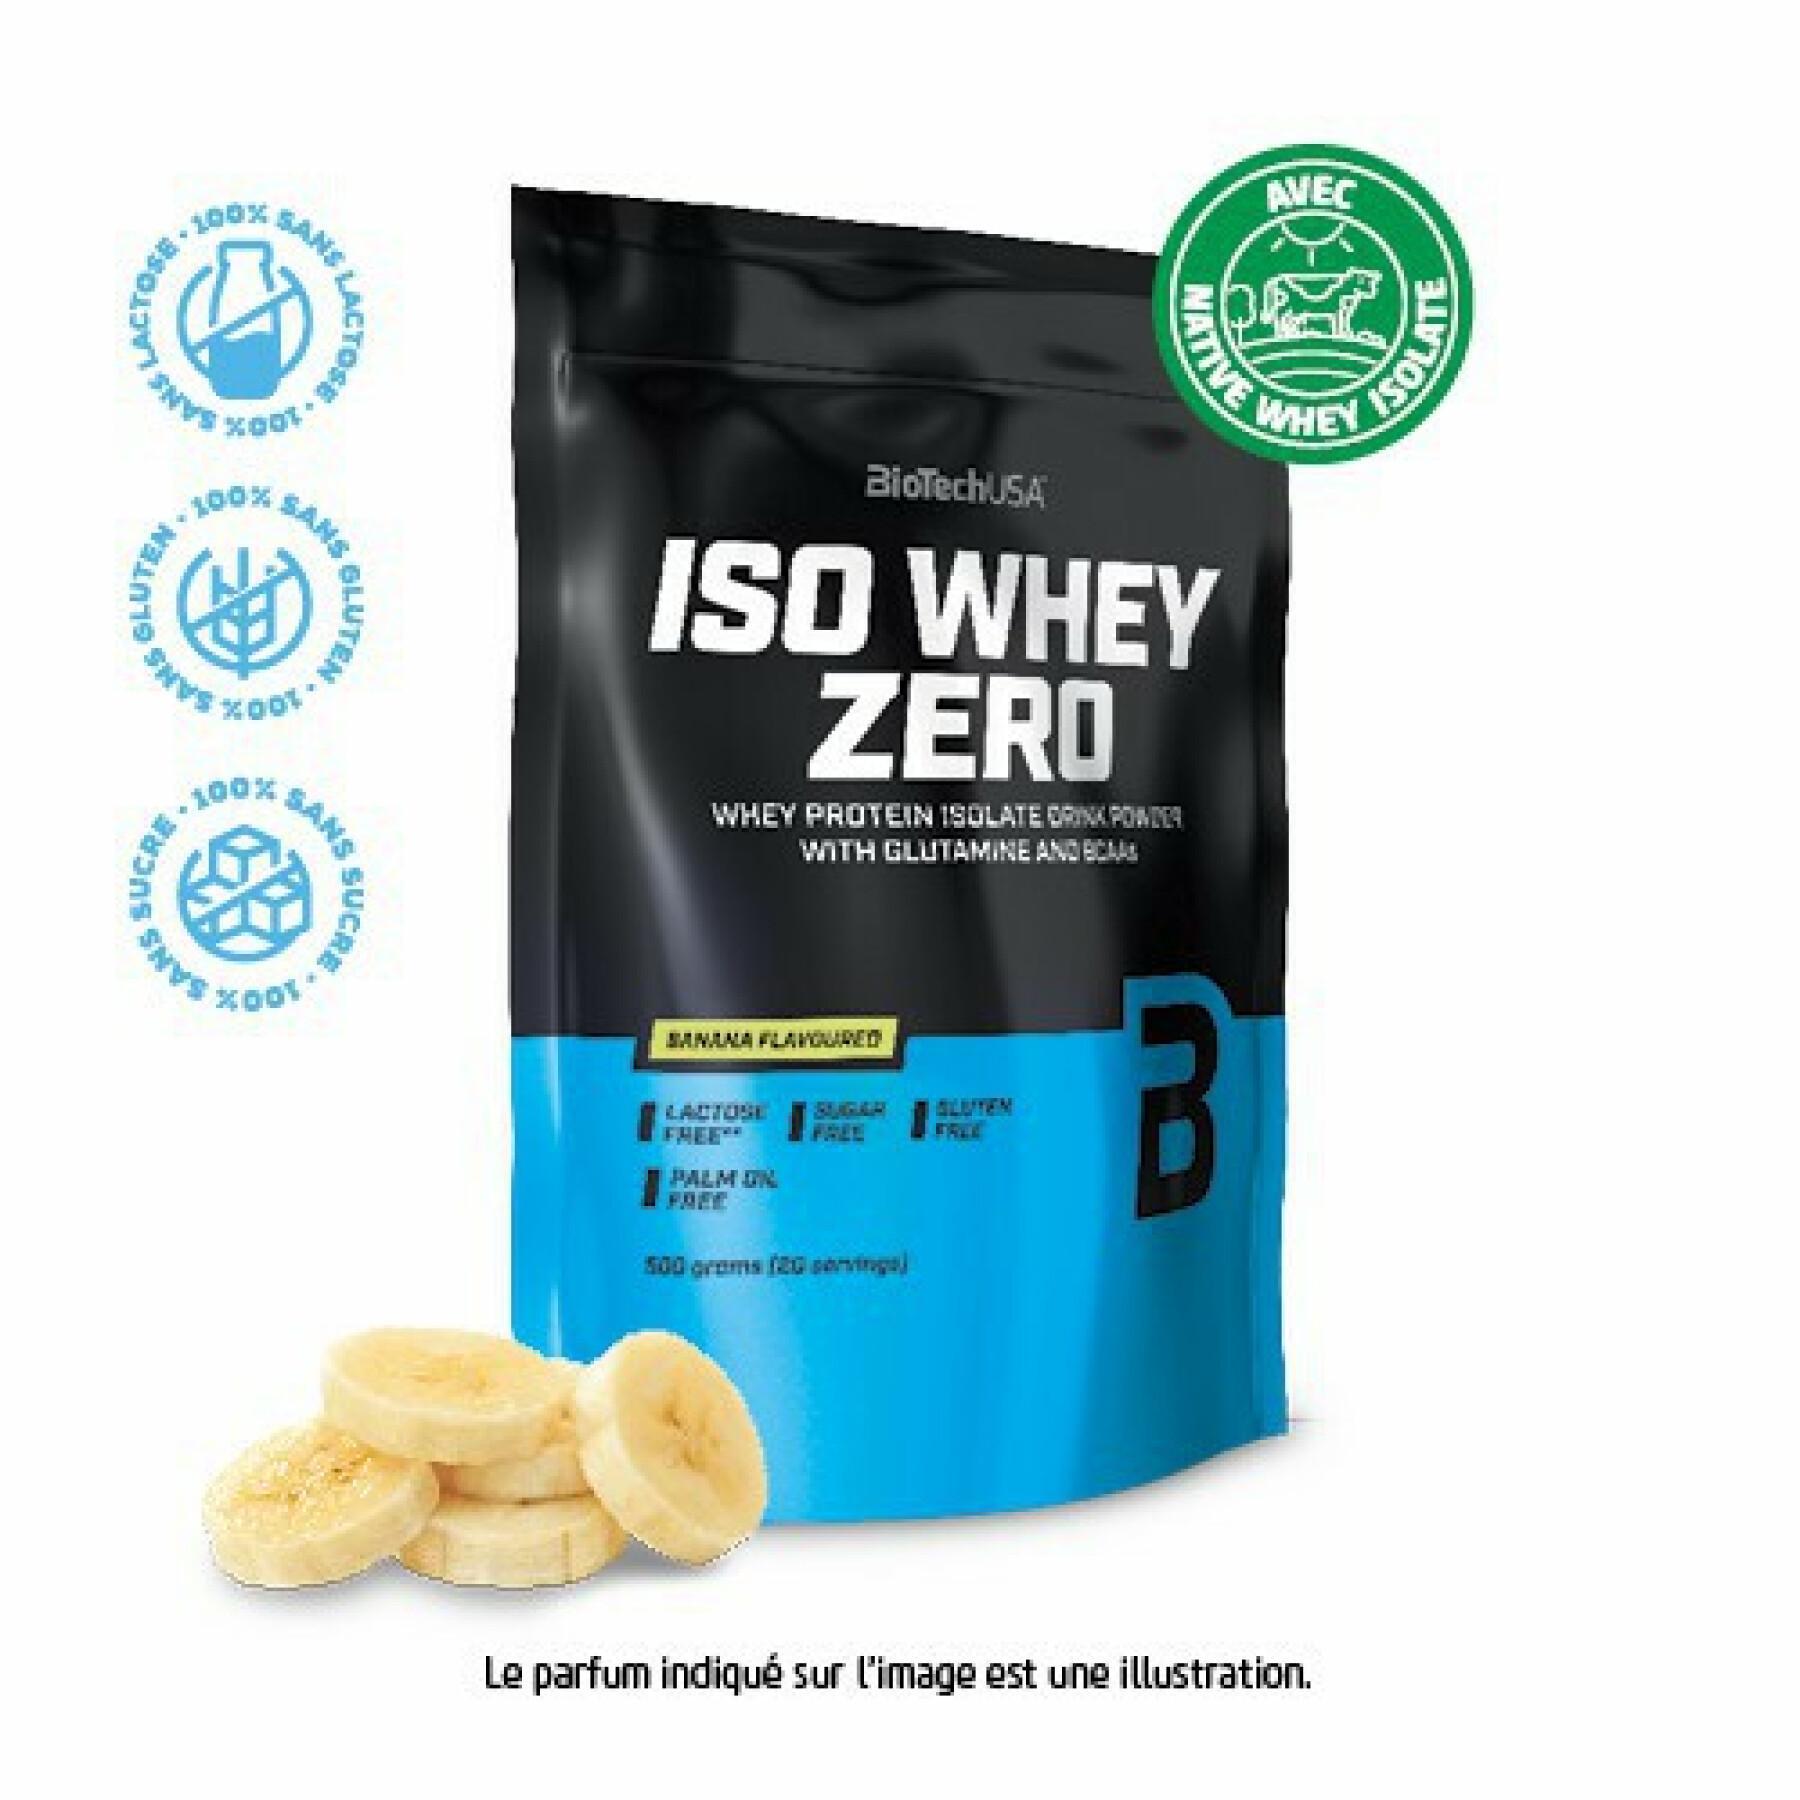 Pak van 10 zakjes proteïne Biotech USA iso whey zero lactose free - Banane - 500g